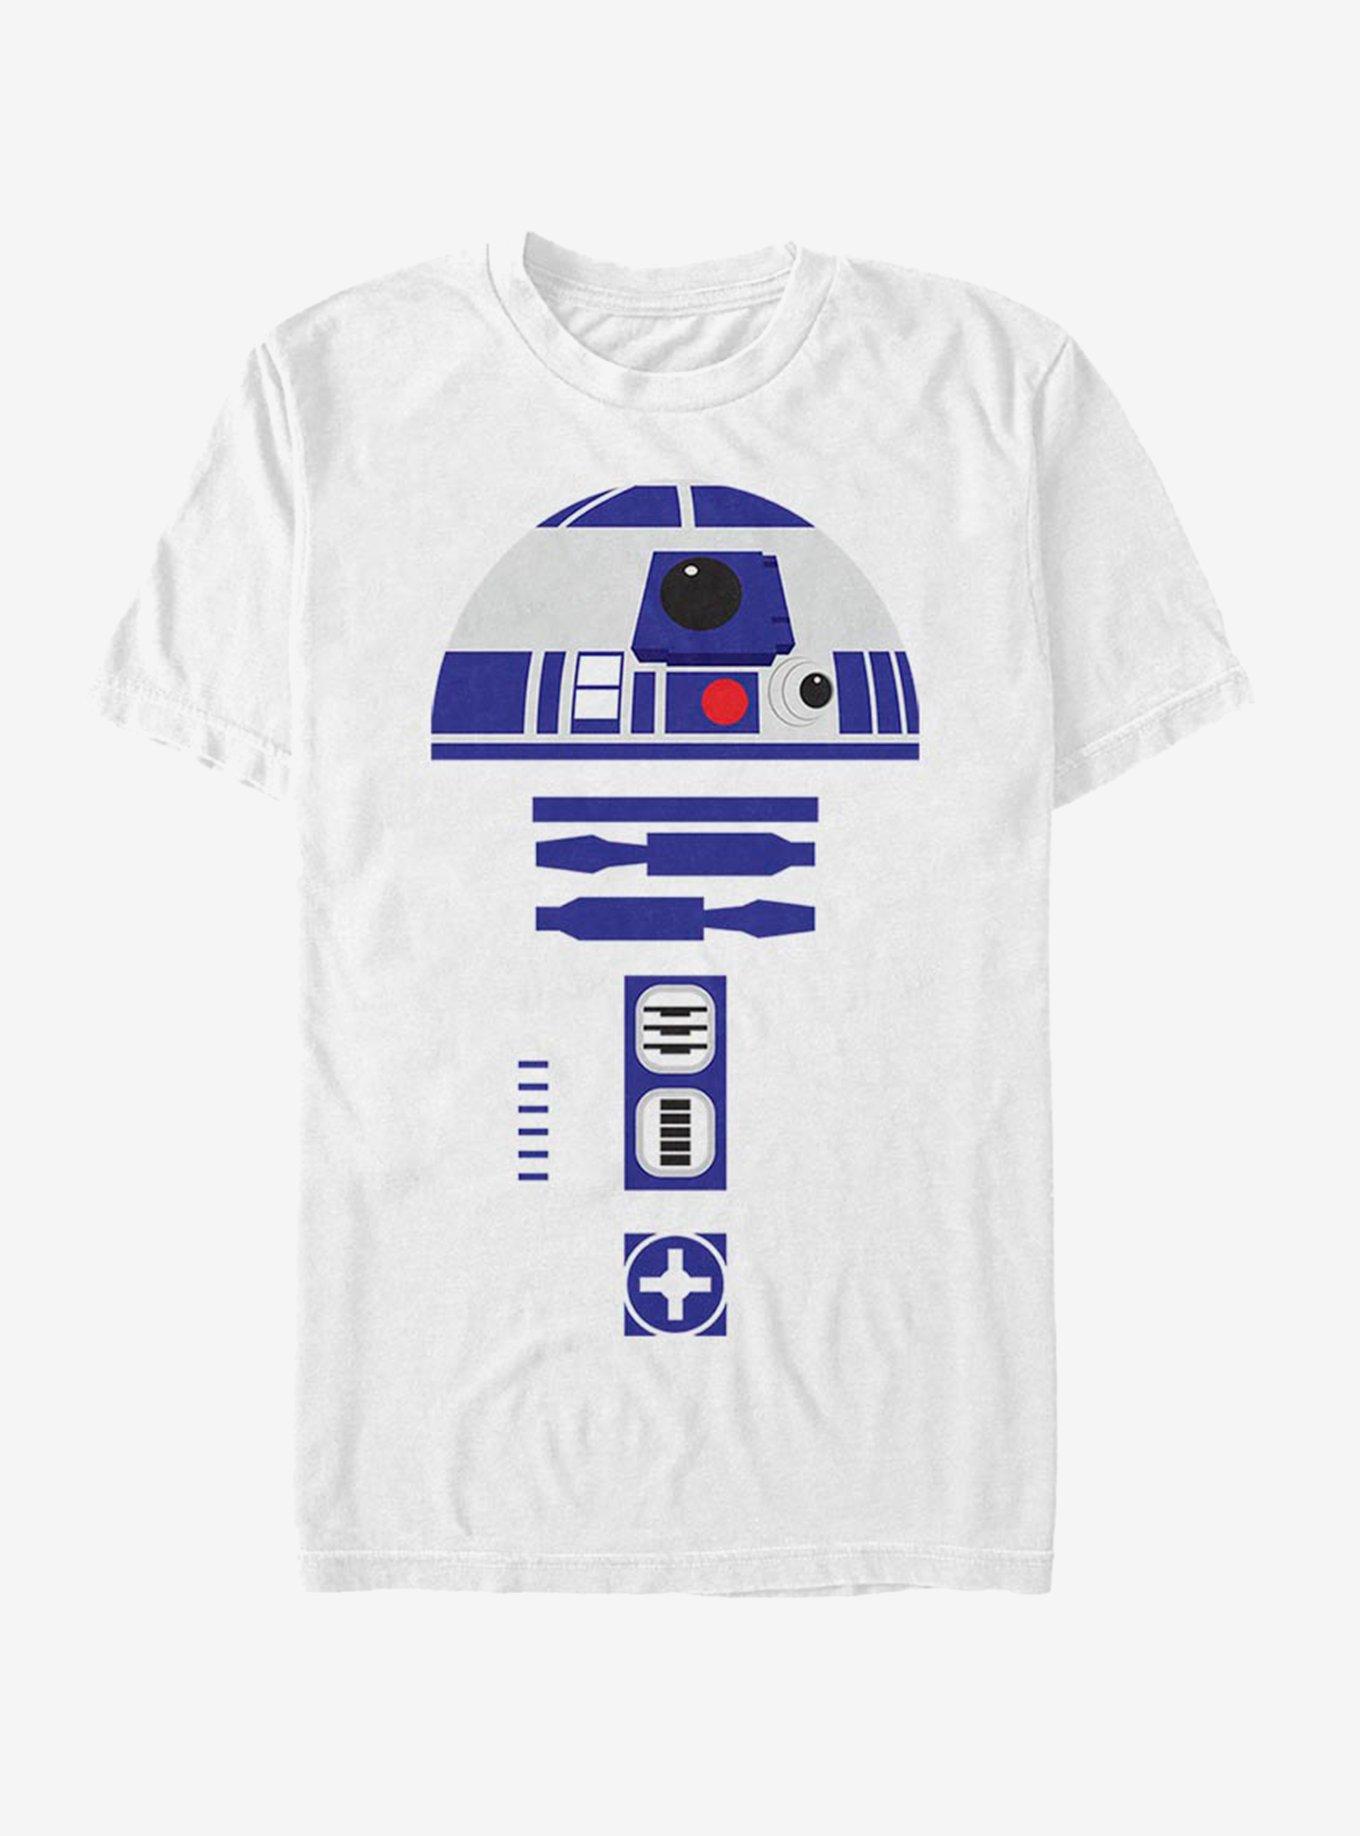 Star Wars Simpler R2-D2 Costume T-Shirt, WHITE, hi-res